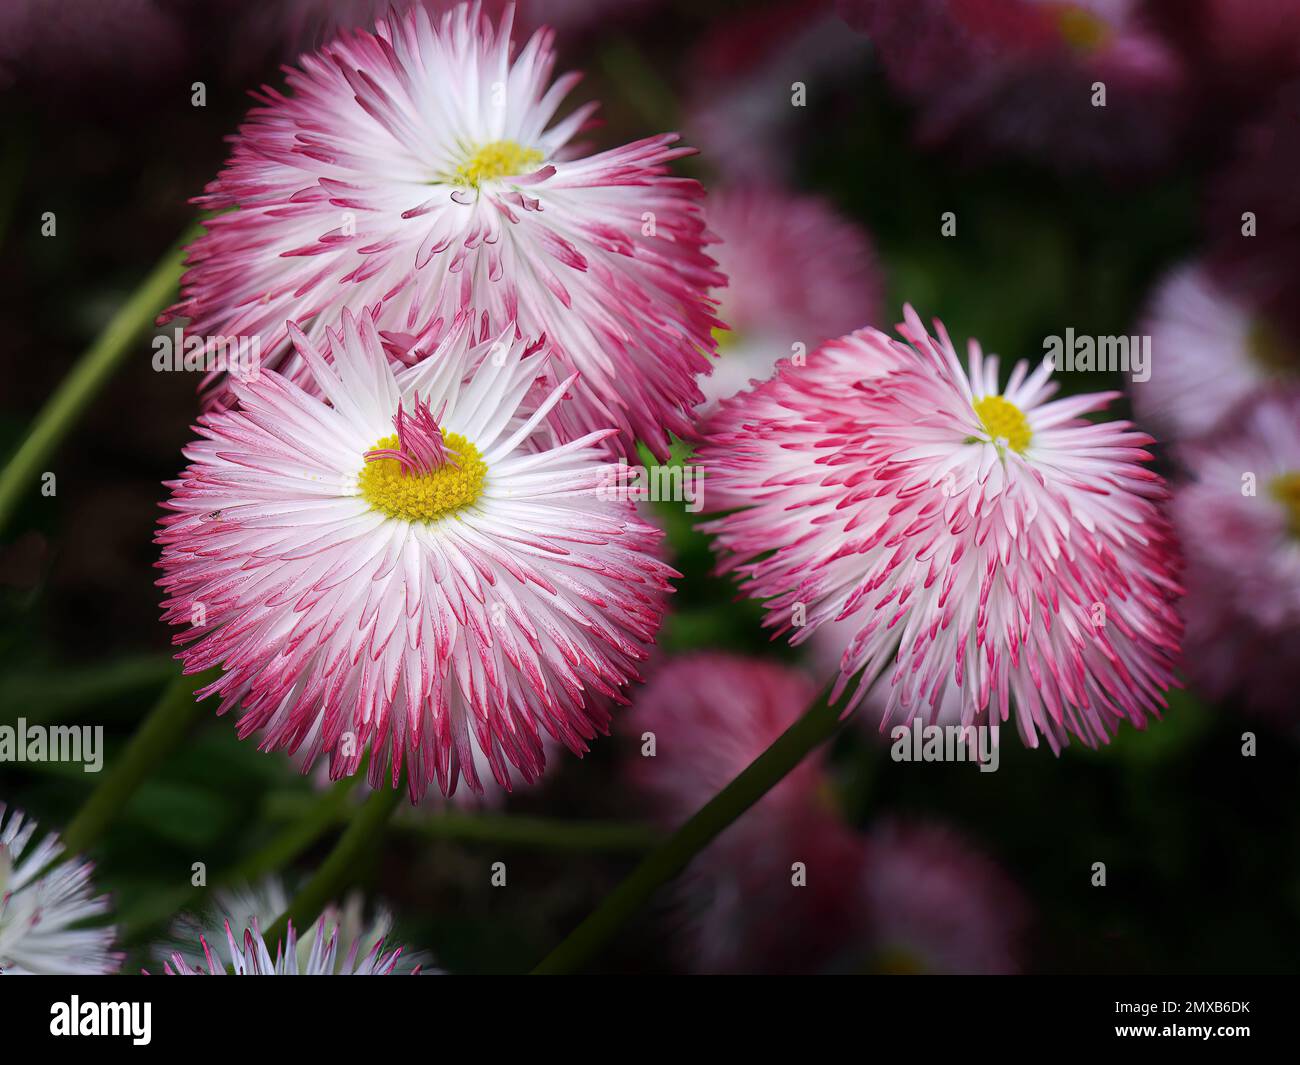 Pink flowers, English Daisy, Bellis perennis pomponette, daisy bloom, AKA Bellis Daisies, flowers garden, selective focus, close up, dark background Stock Photo